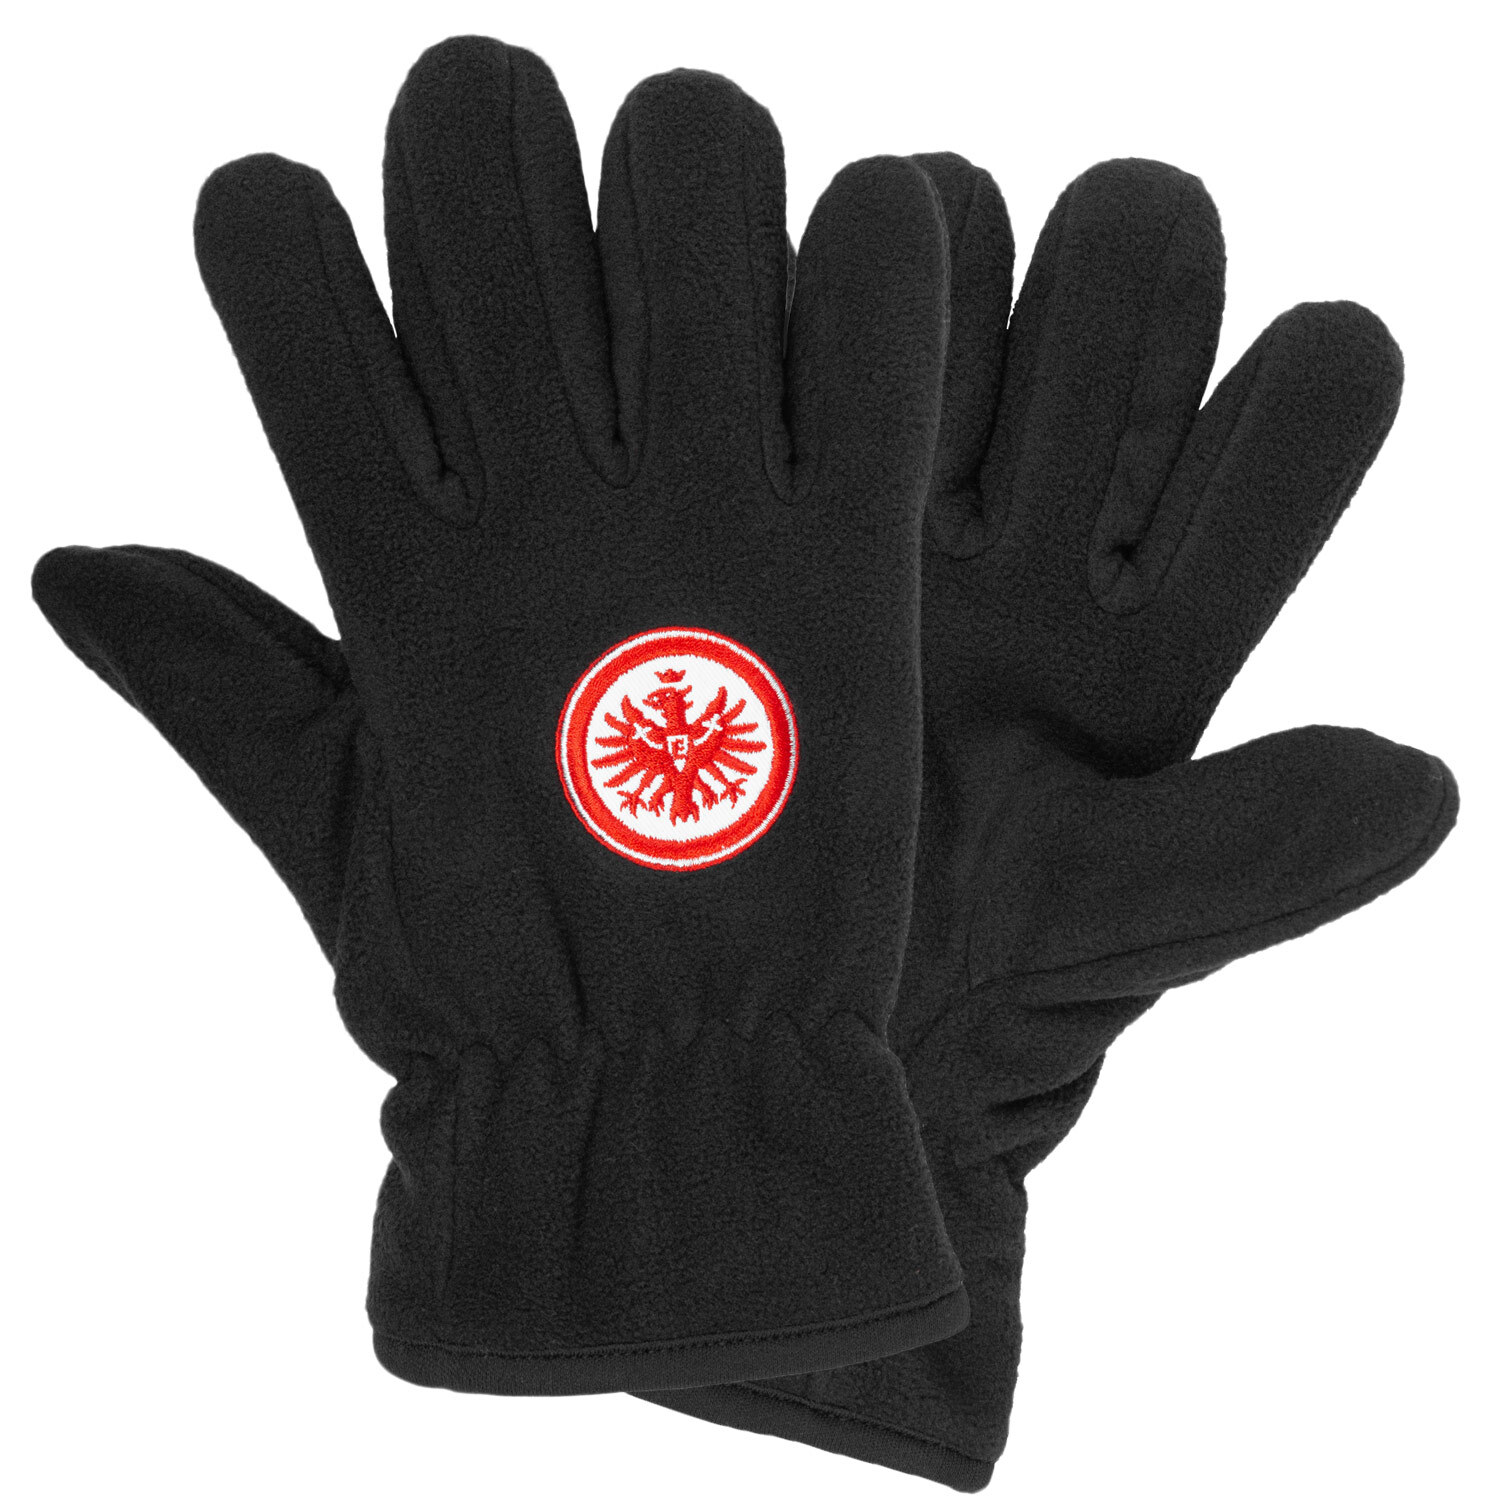 Bild 1: Fleece Gloves